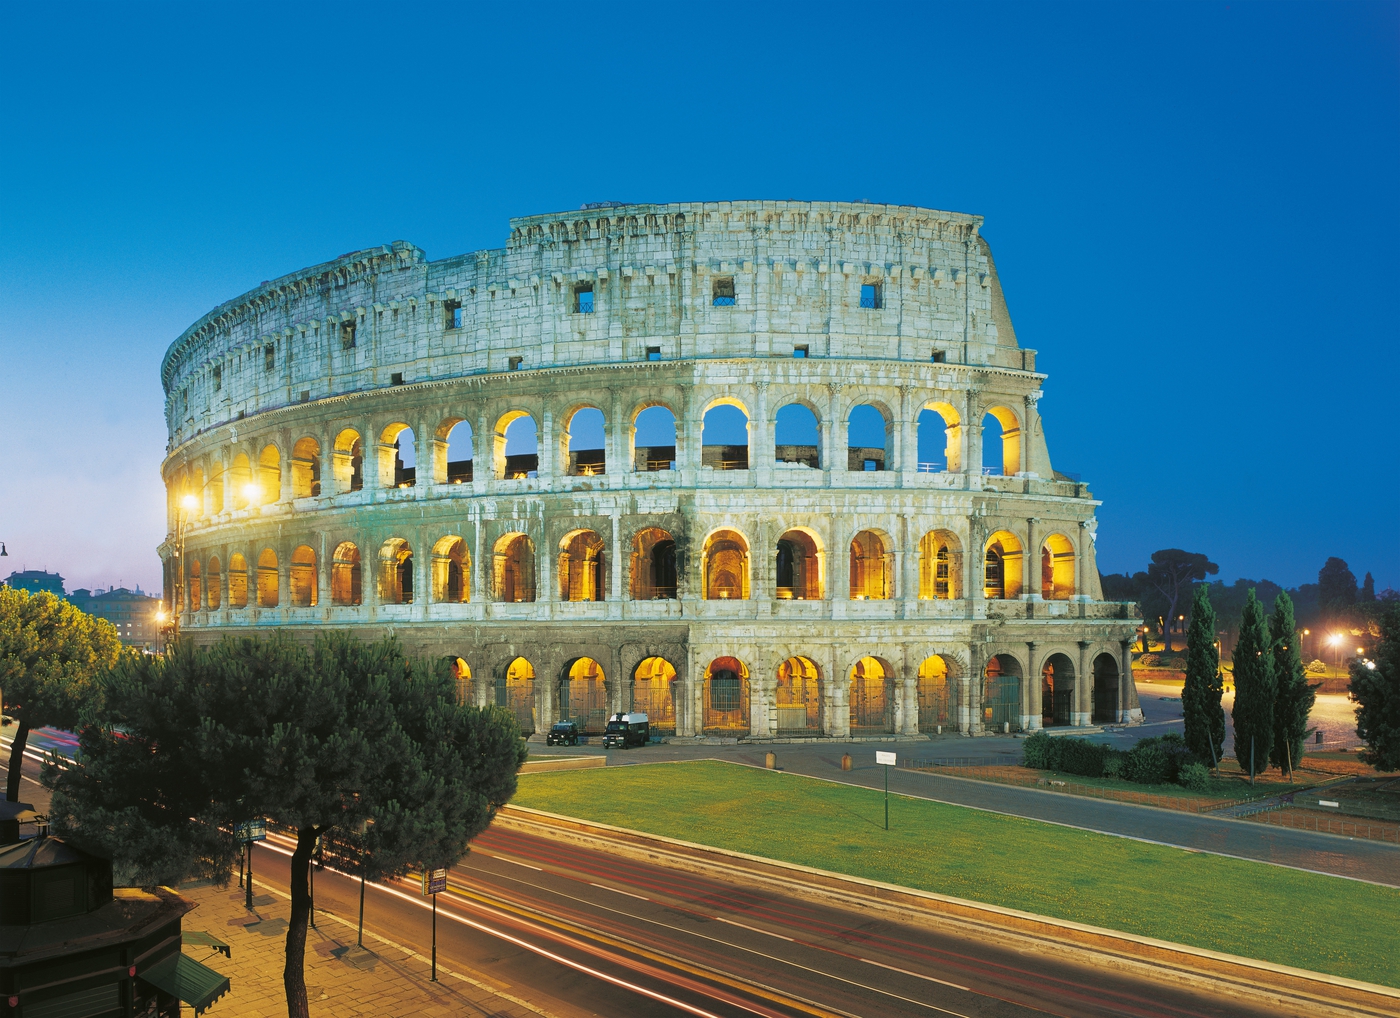 Colosseum by Night Schmidt Jigsaw Puzzle 1000 pieces Rome puzzle 58235 